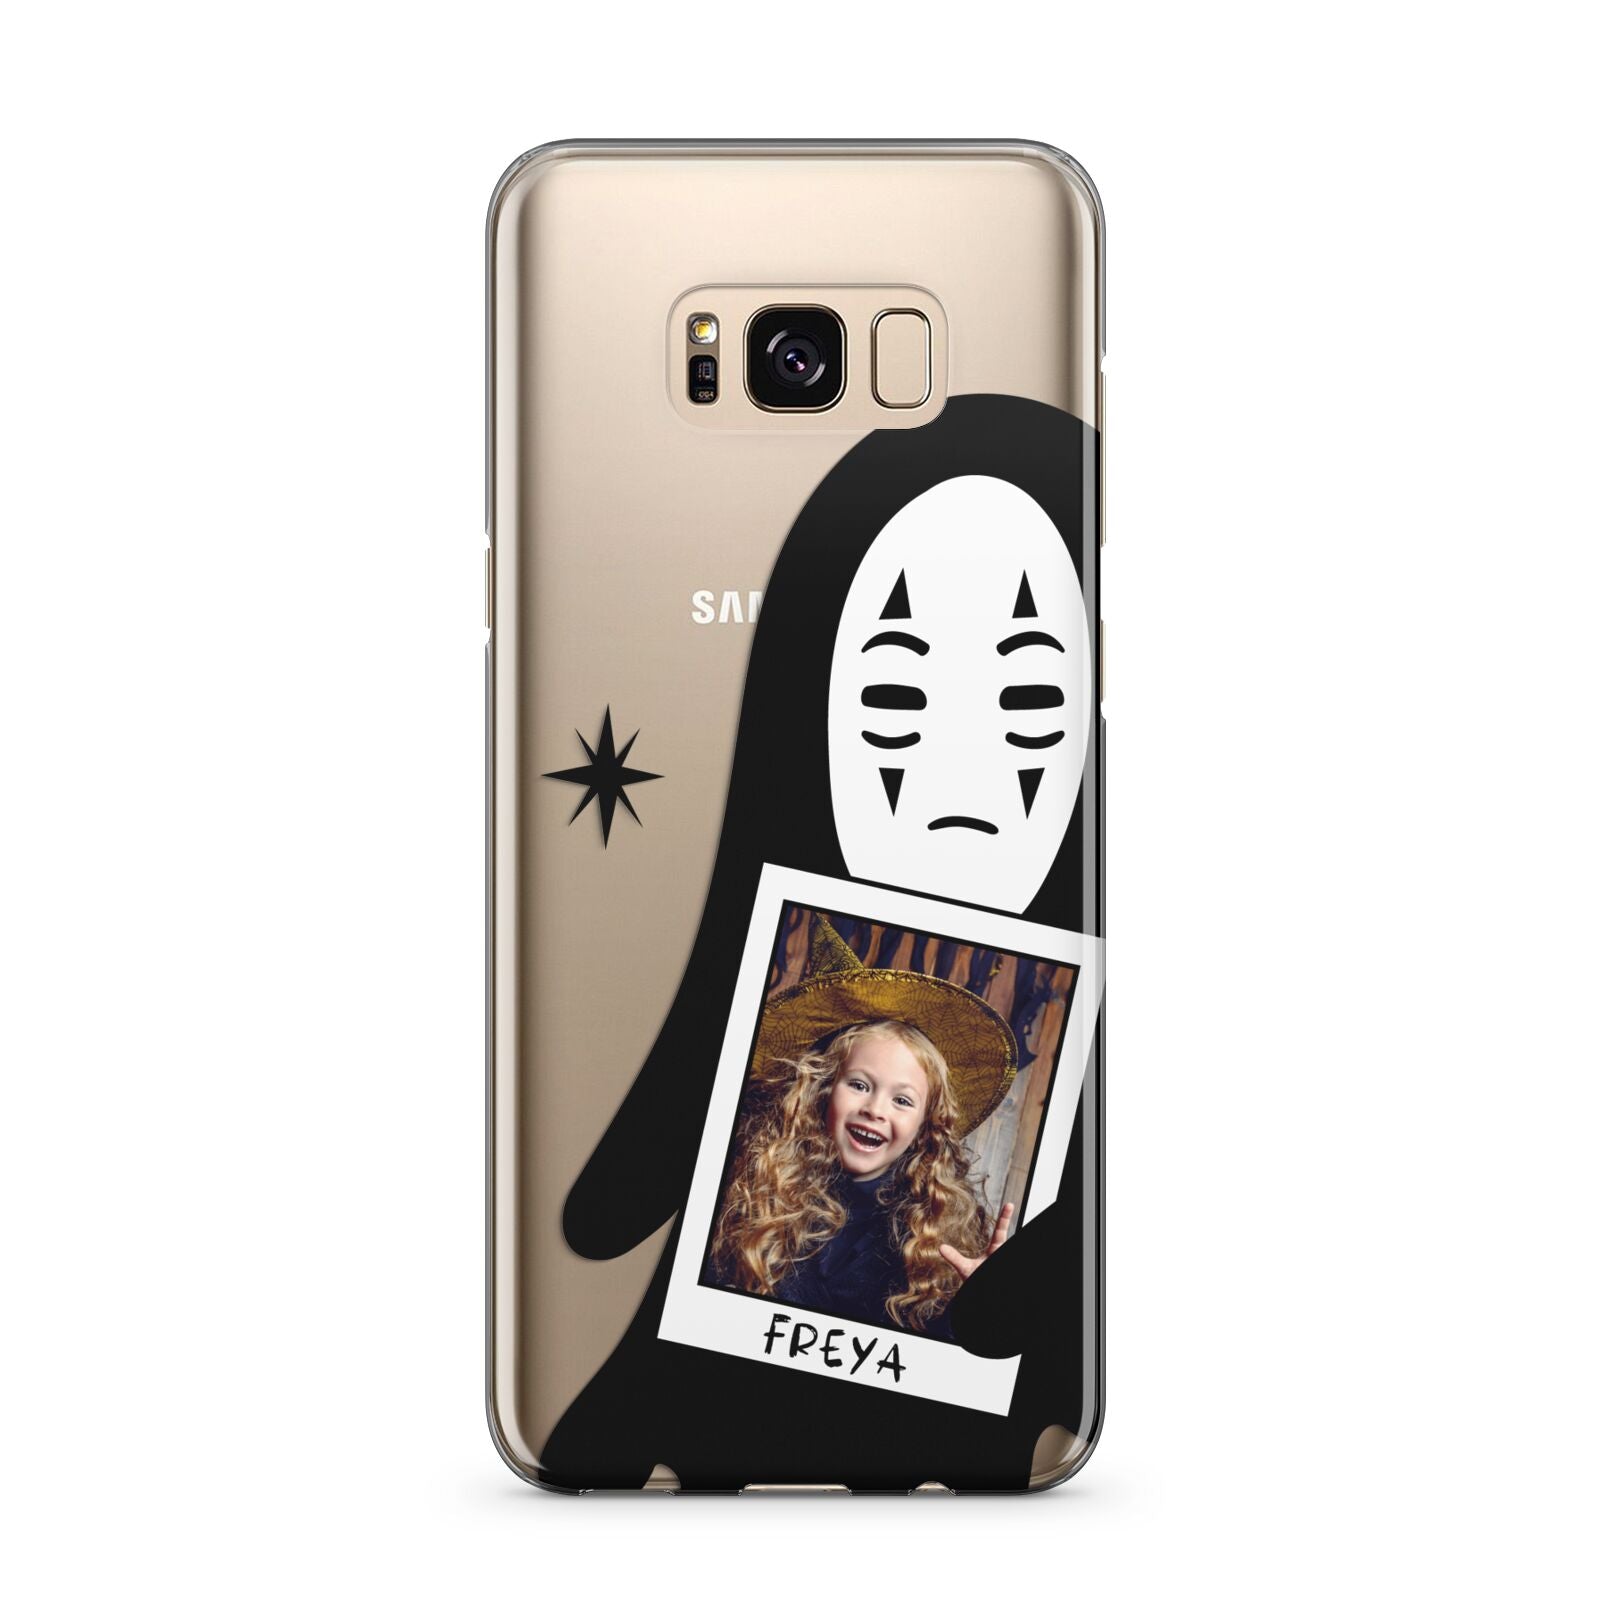 Ghostly Halloween Photo Samsung Galaxy S8 Plus Case